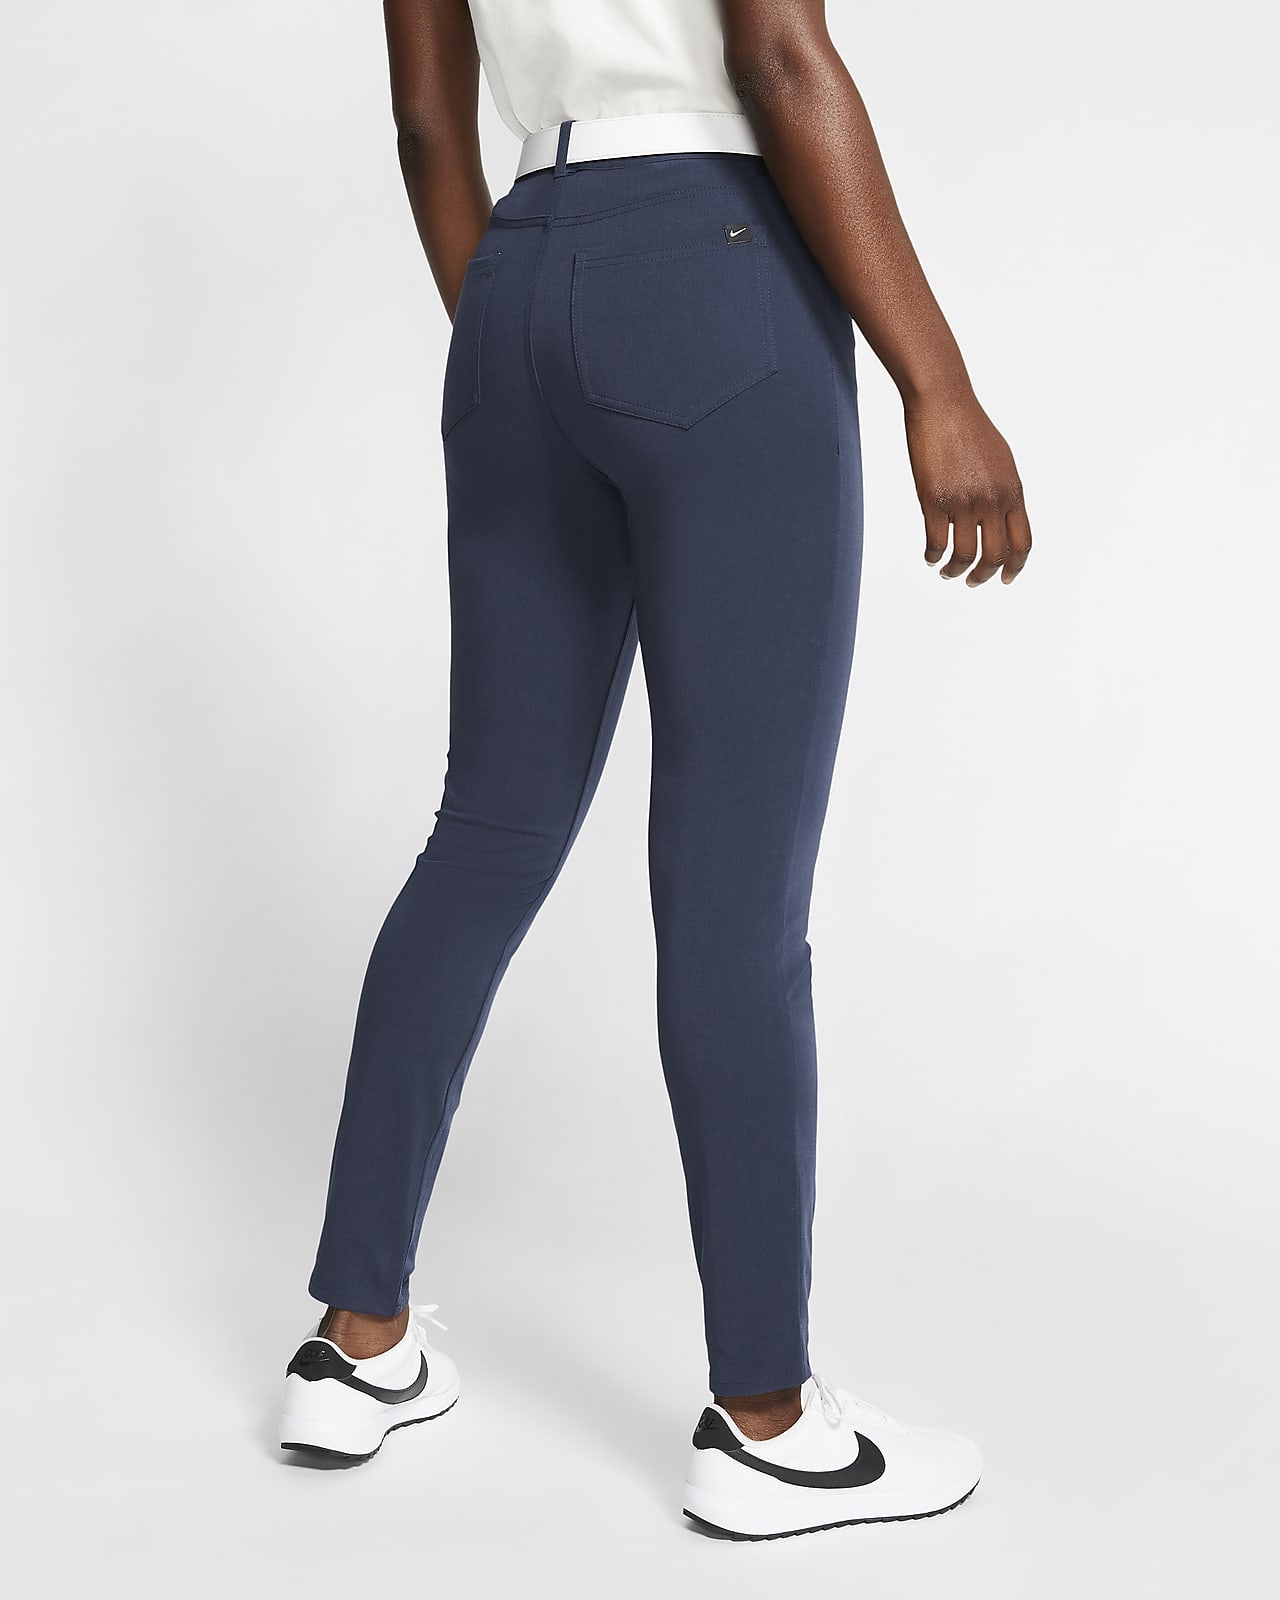 new pants design for ladies golf